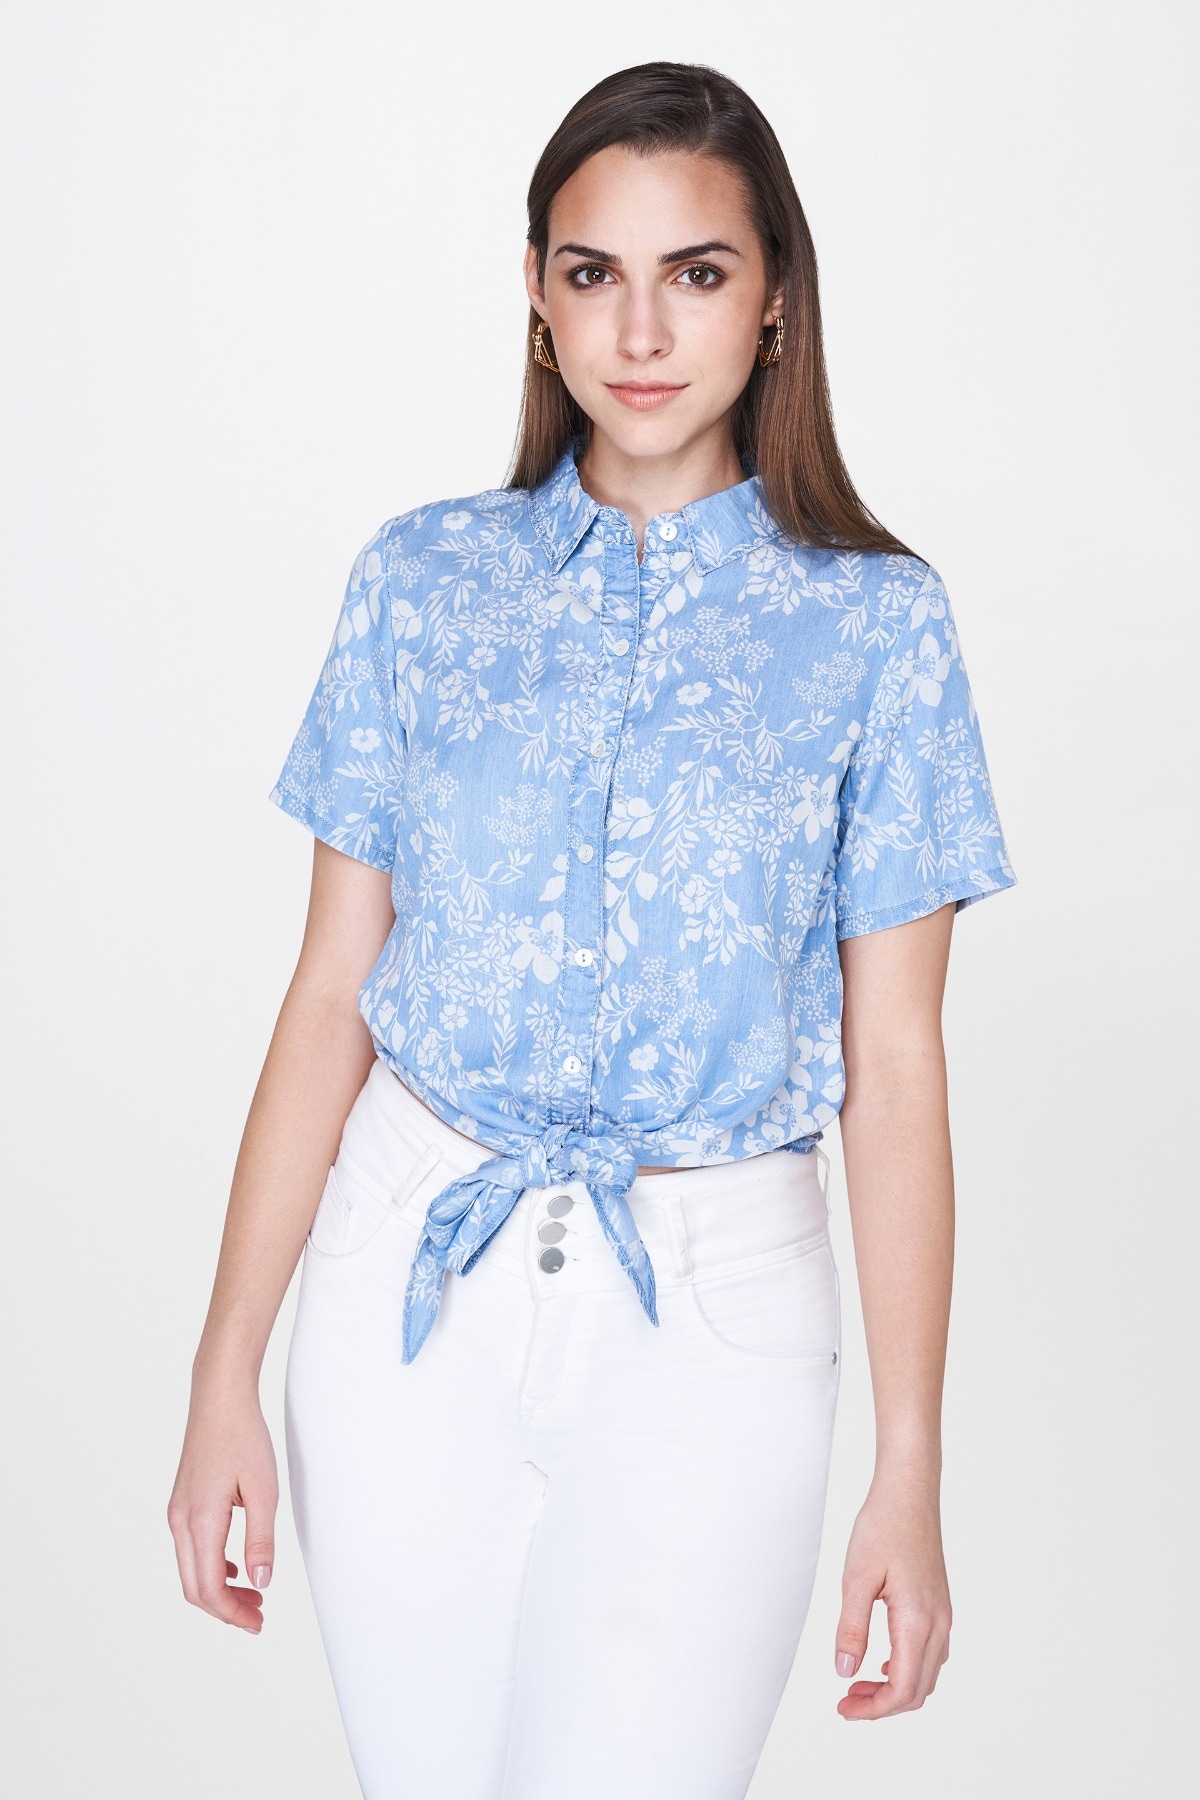 1 - Light Blue Floral Tie-Ups Shirt Style Crop Top, image 1